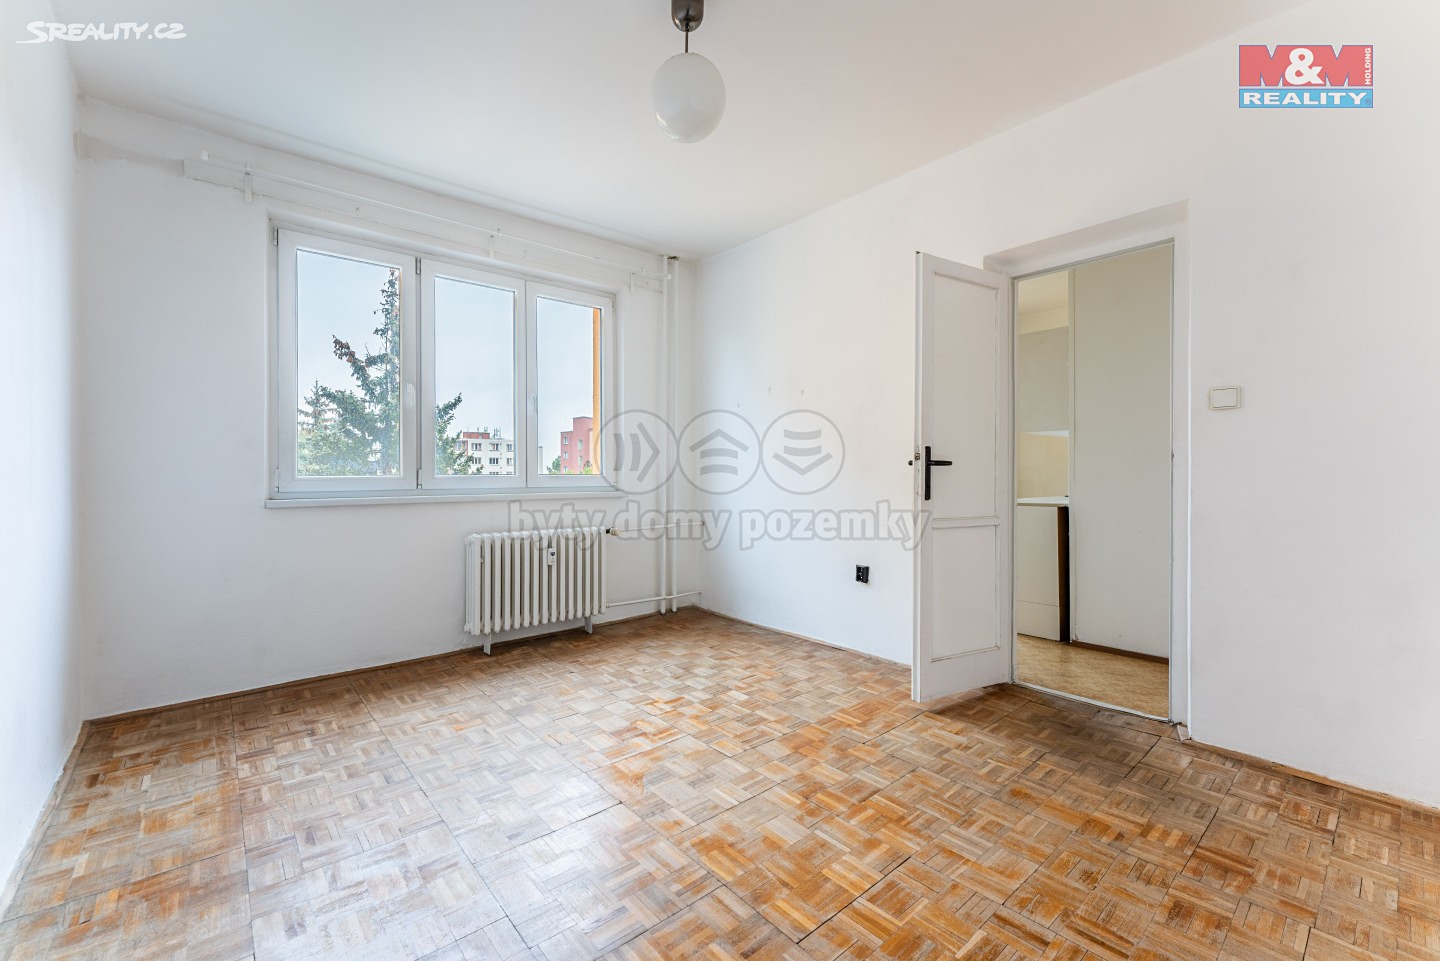 Prodej bytu 2+1 56 m², Etiopská, Praha 6 - Vokovice